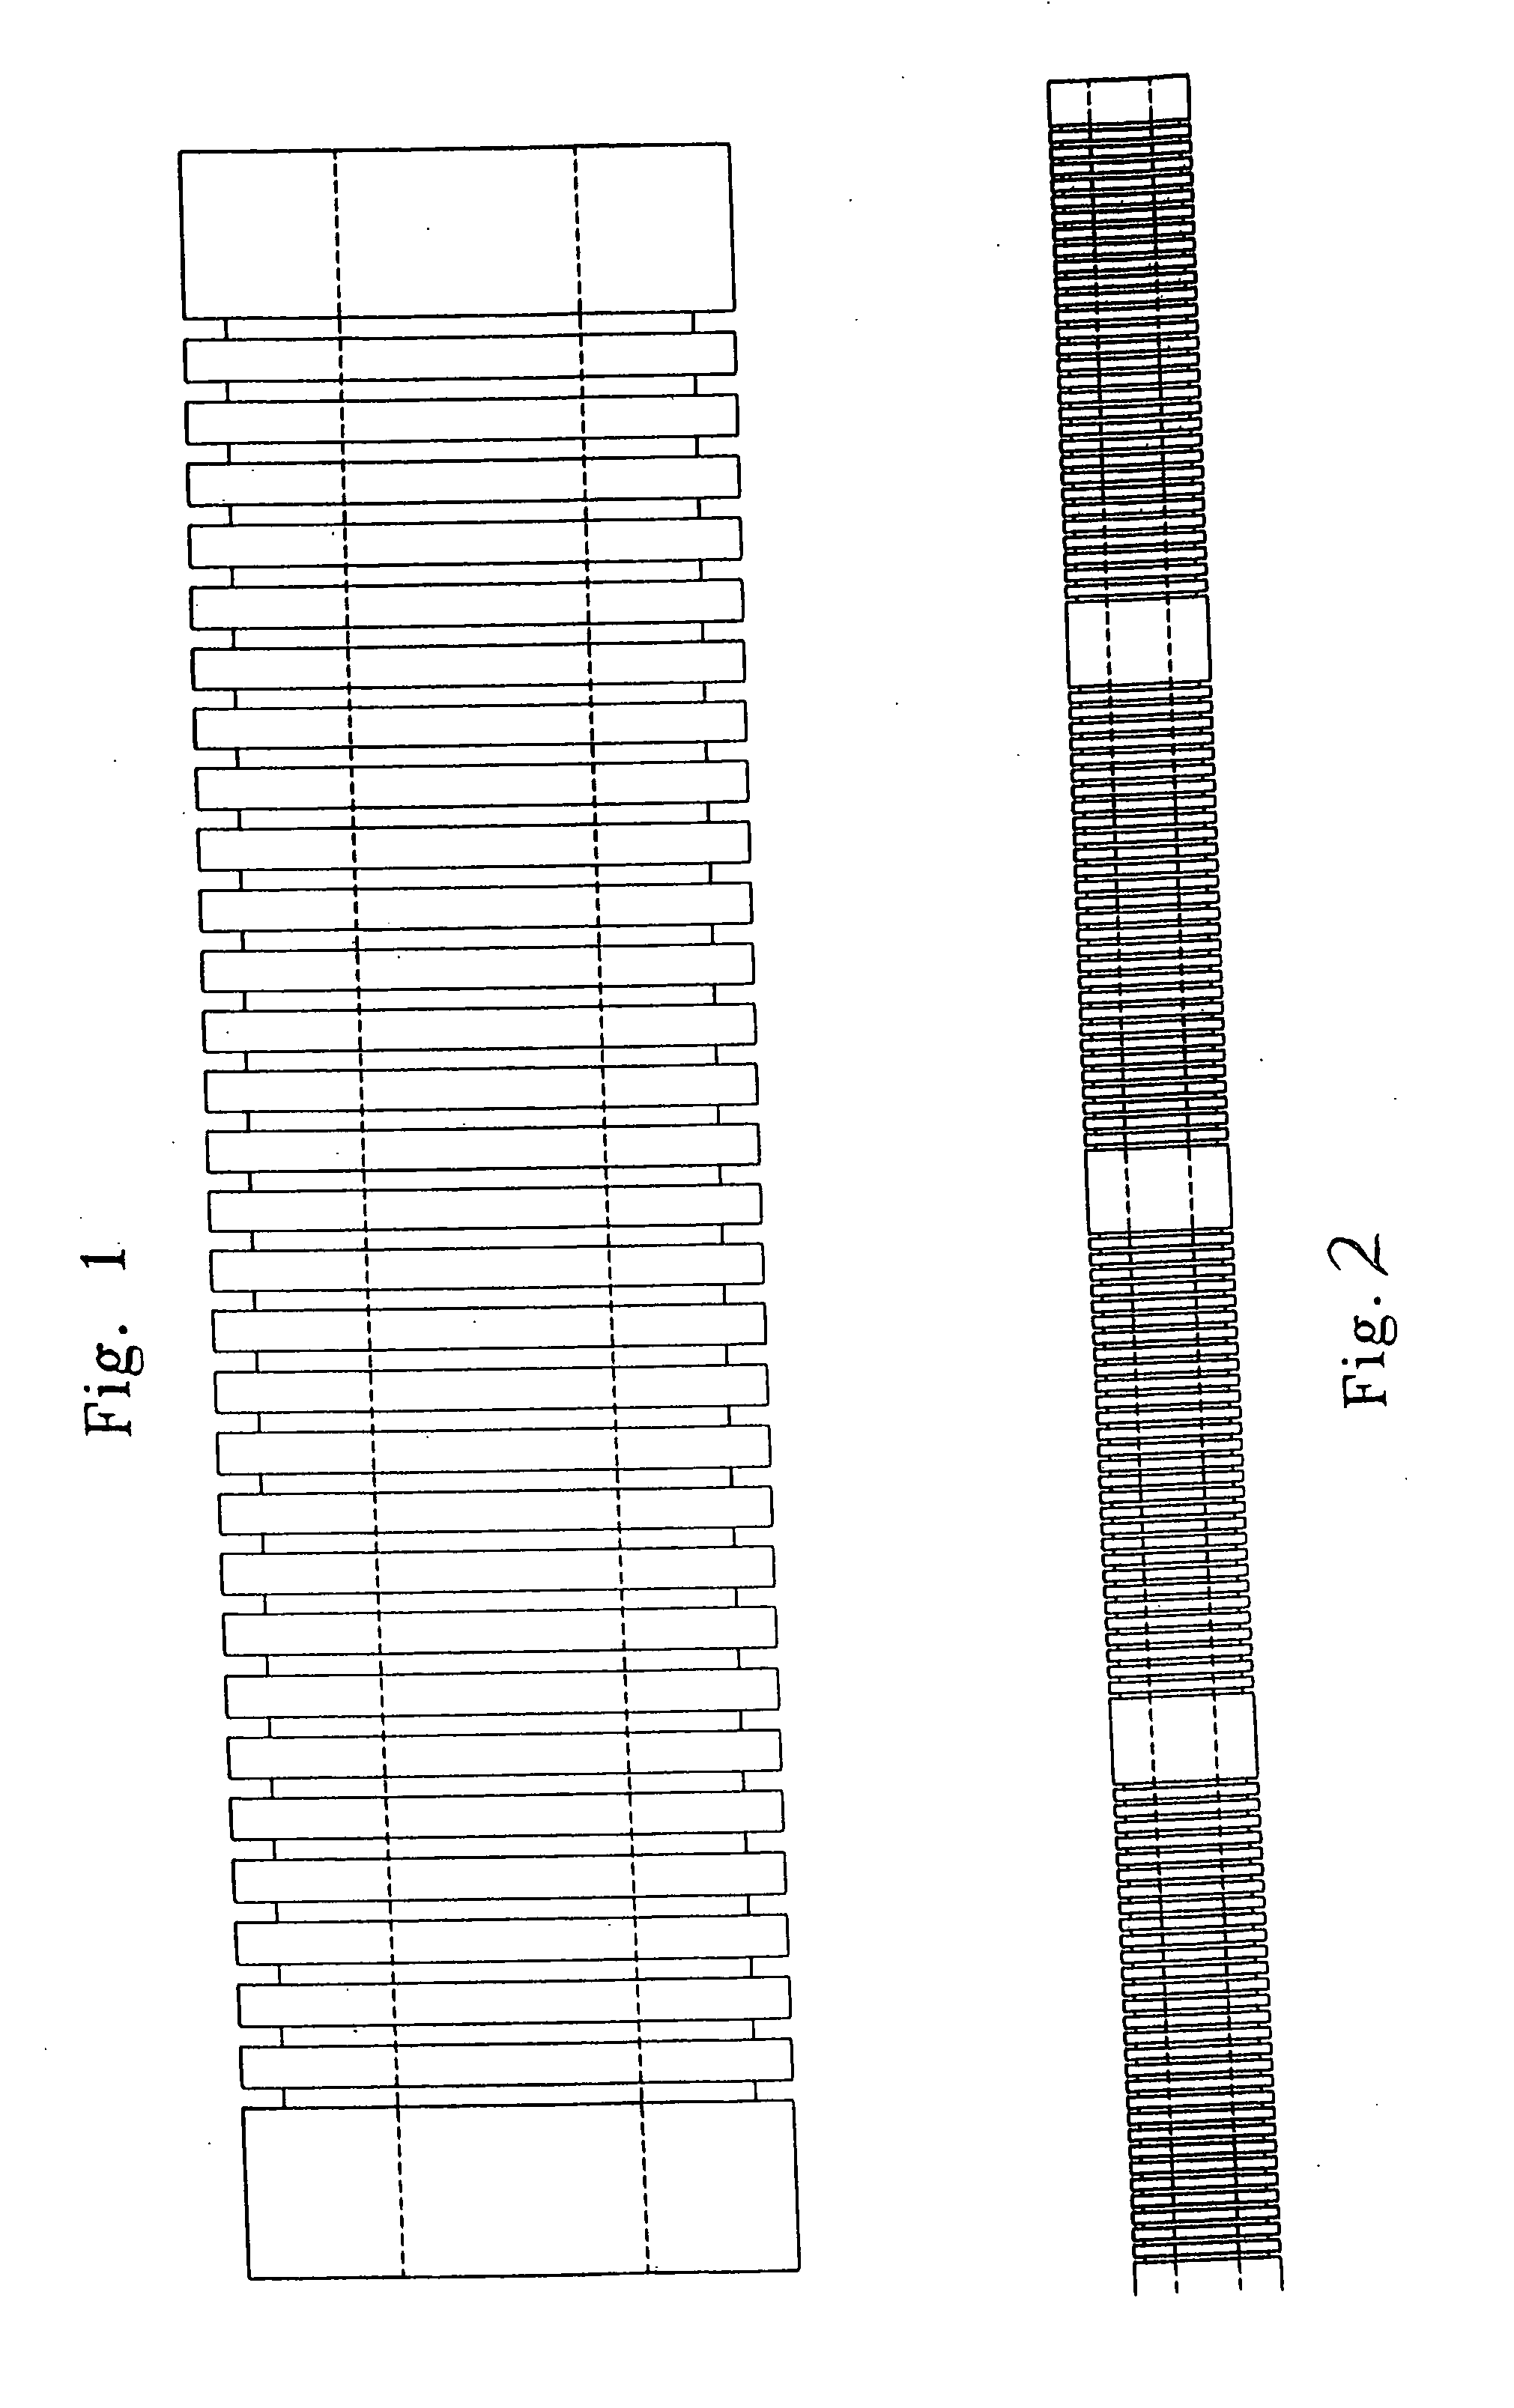 Fabrication of filter elements using polyolefins having certain rheological properties